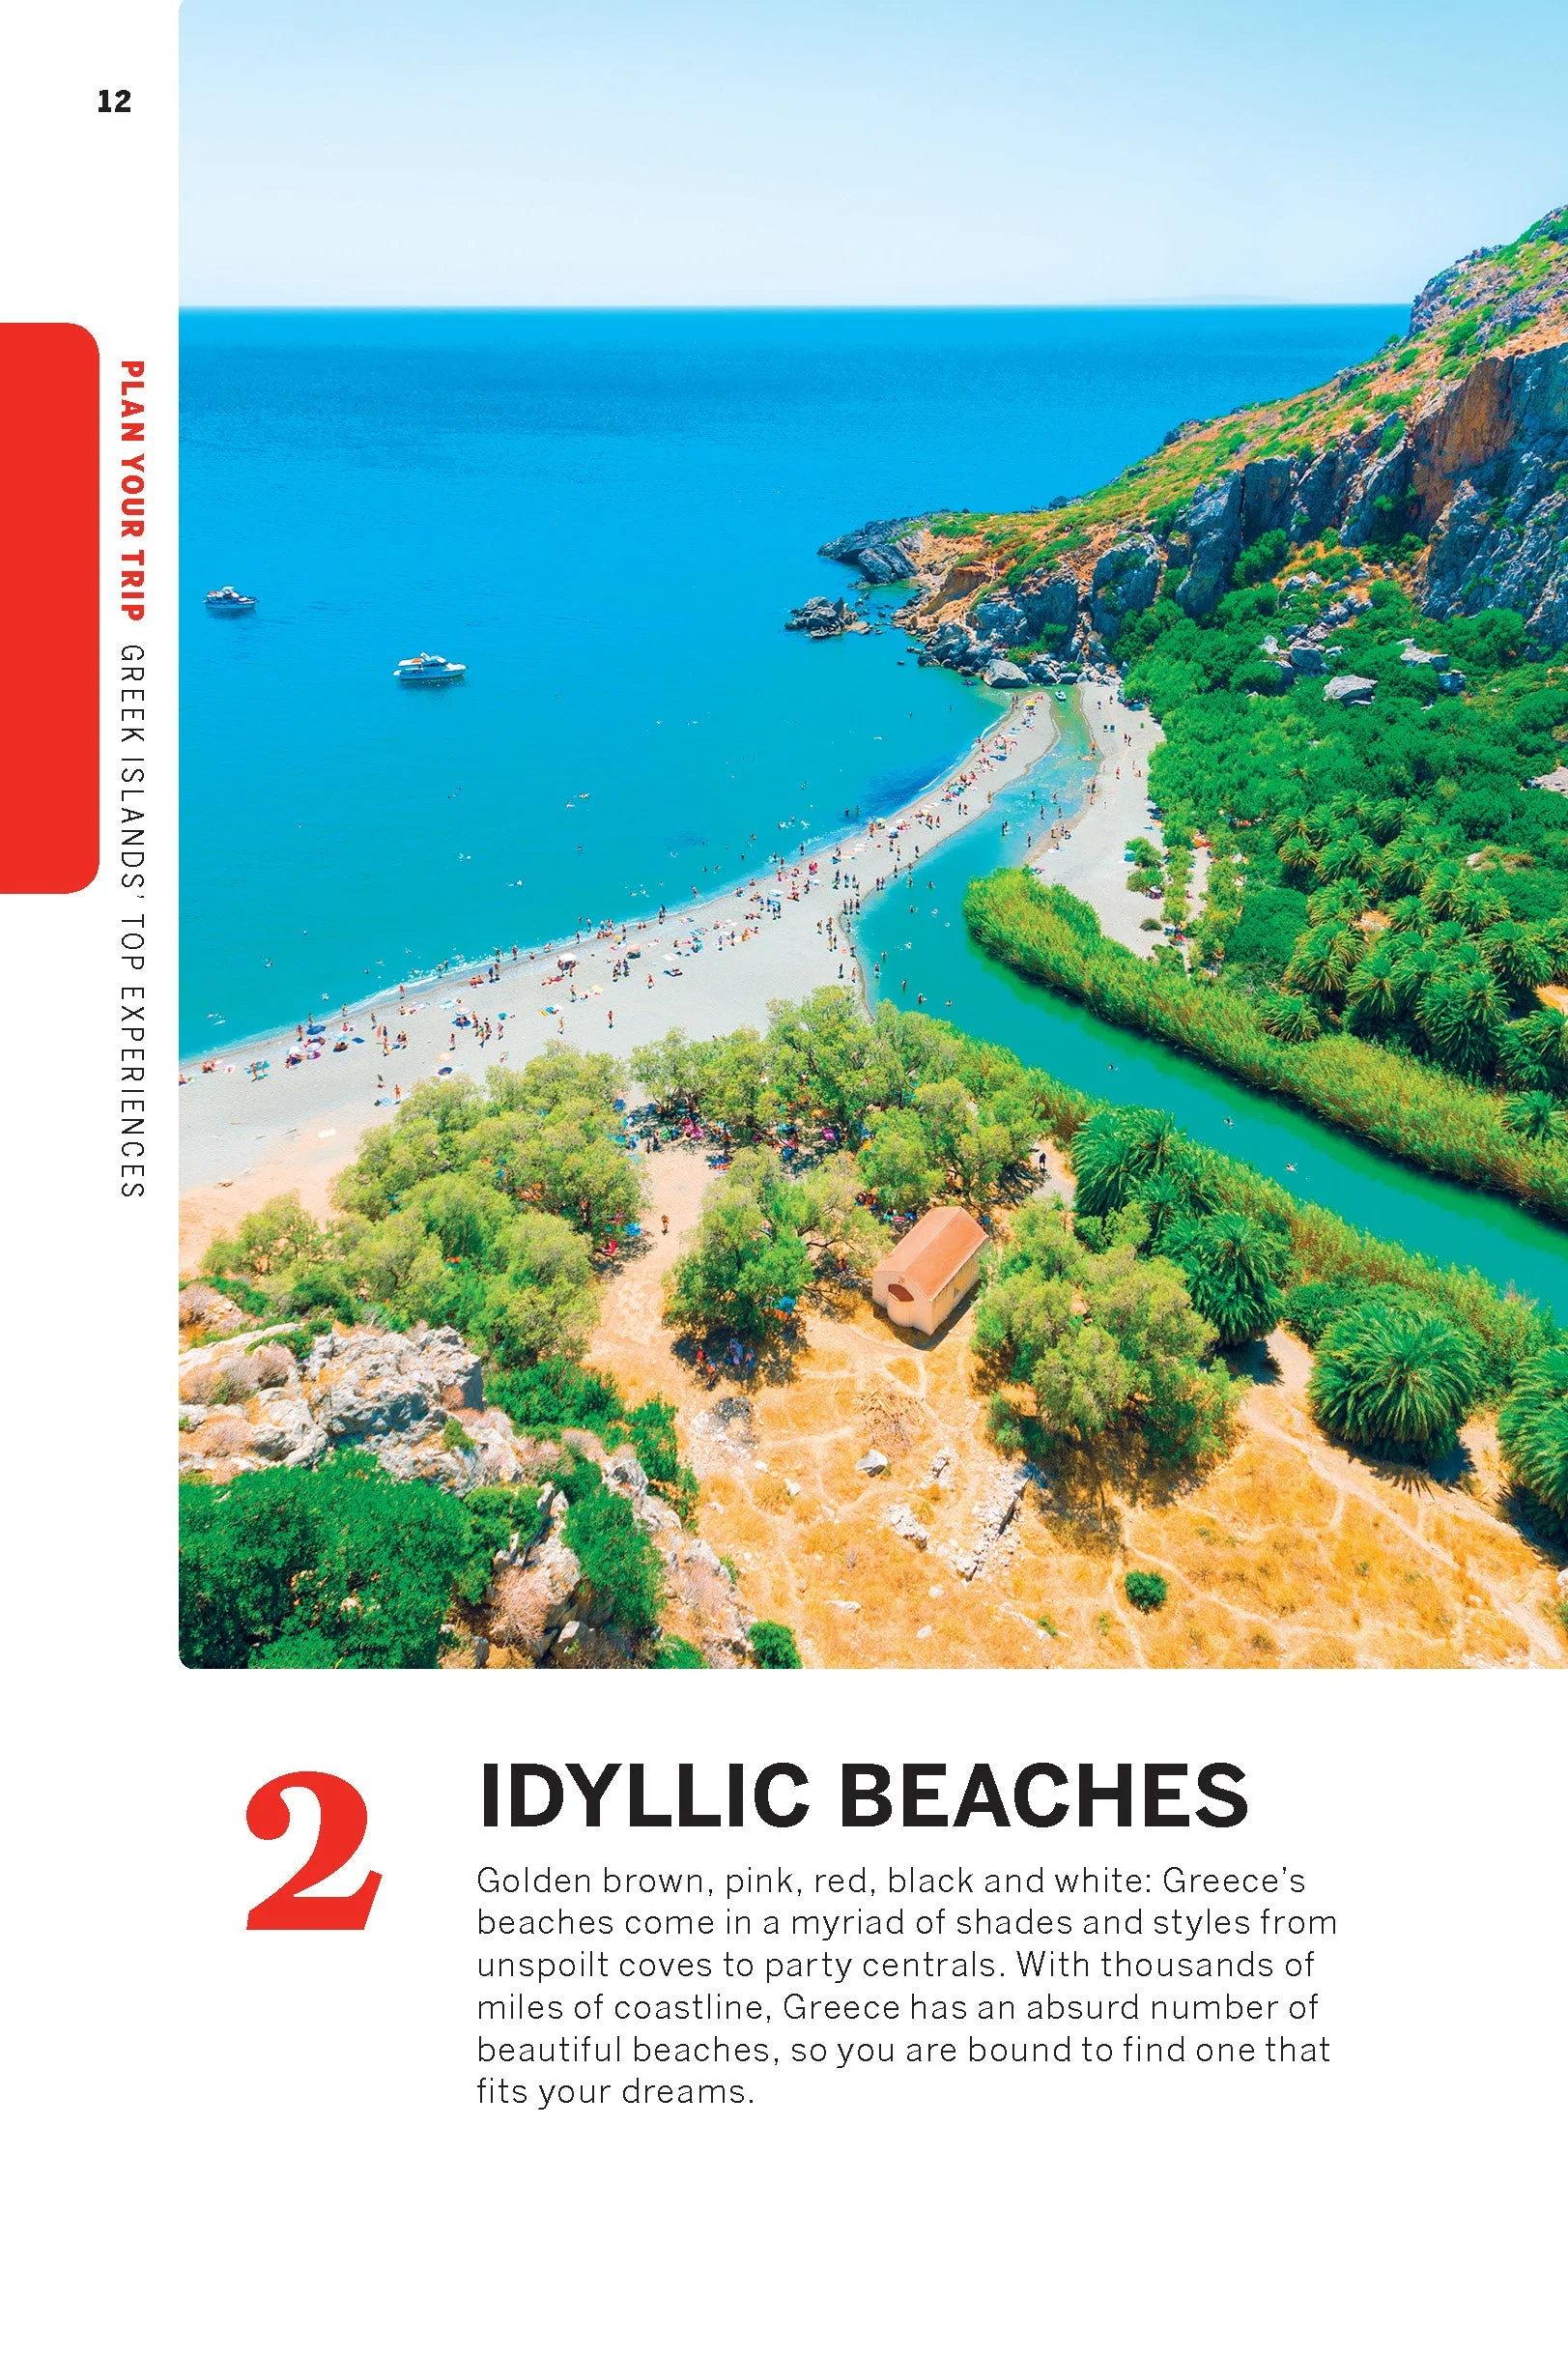 Greek Islands Lonely Planet